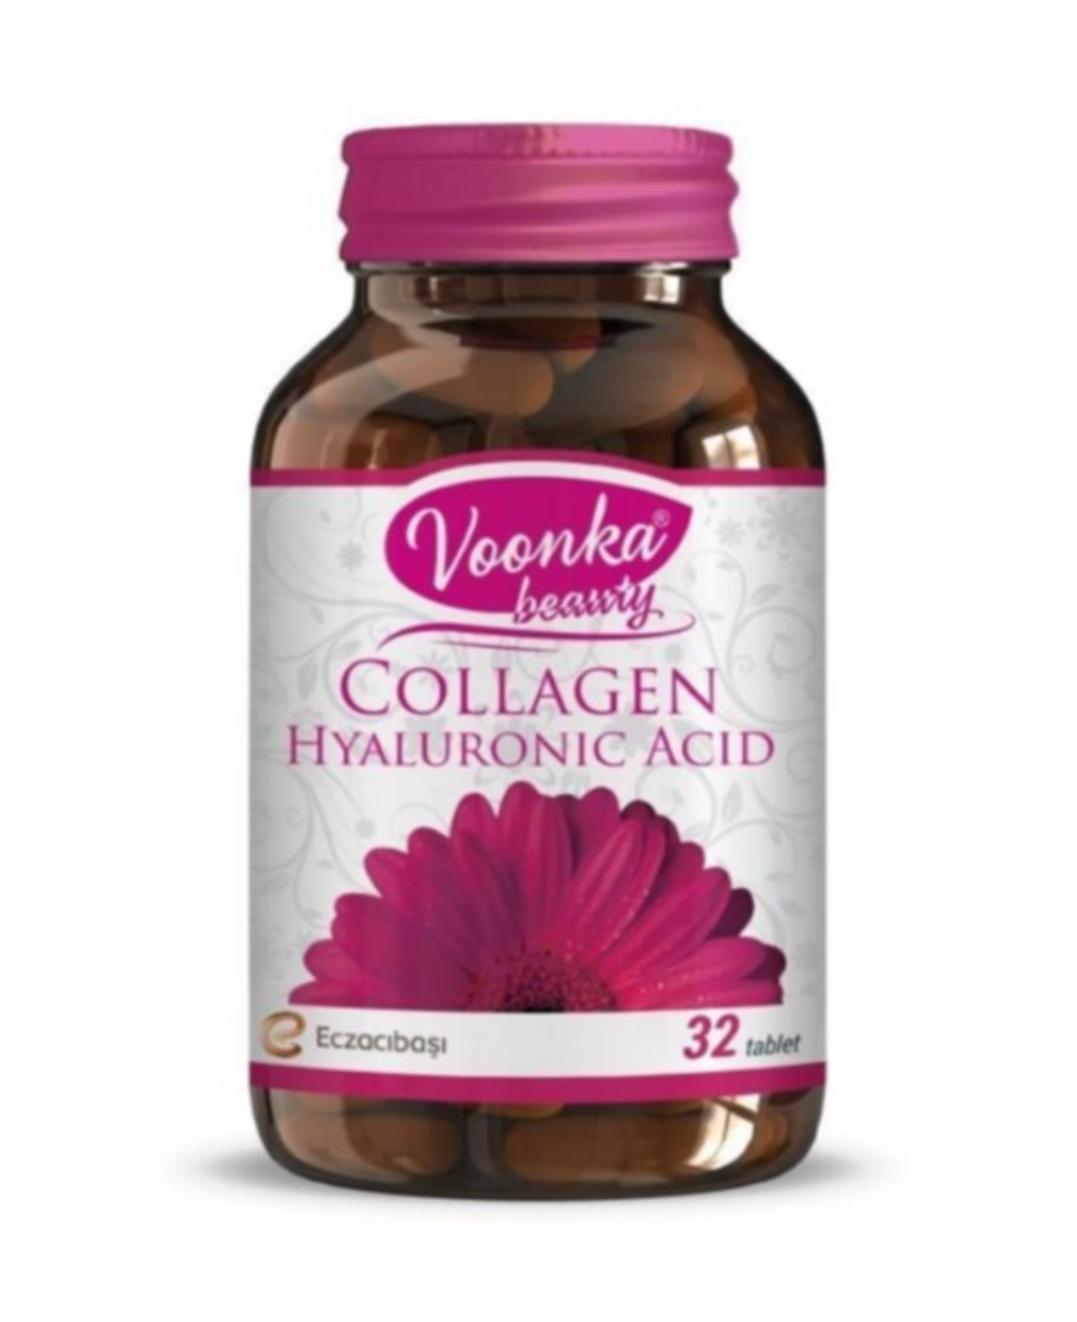 Voonka Collagen Hyaluronic Acid 32 tablet